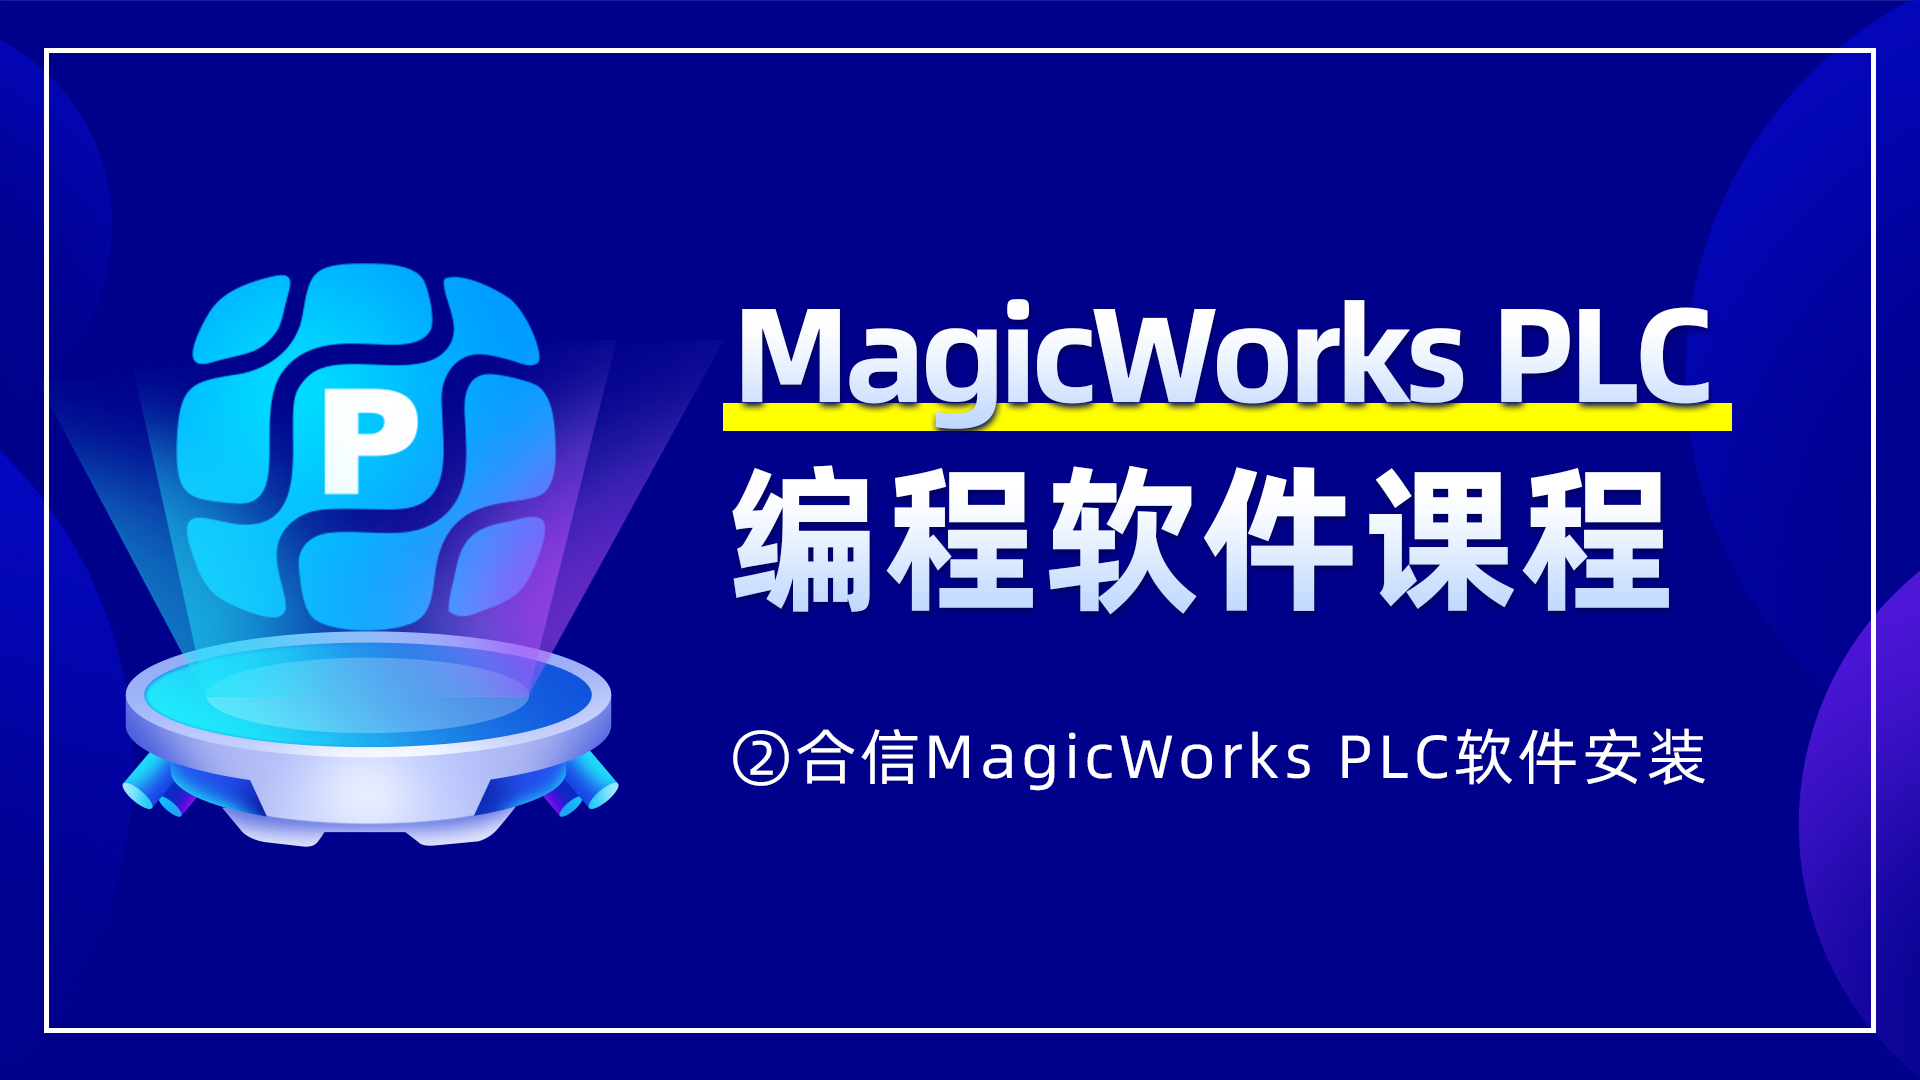 2. 合信MagicWorks PLC软件安装